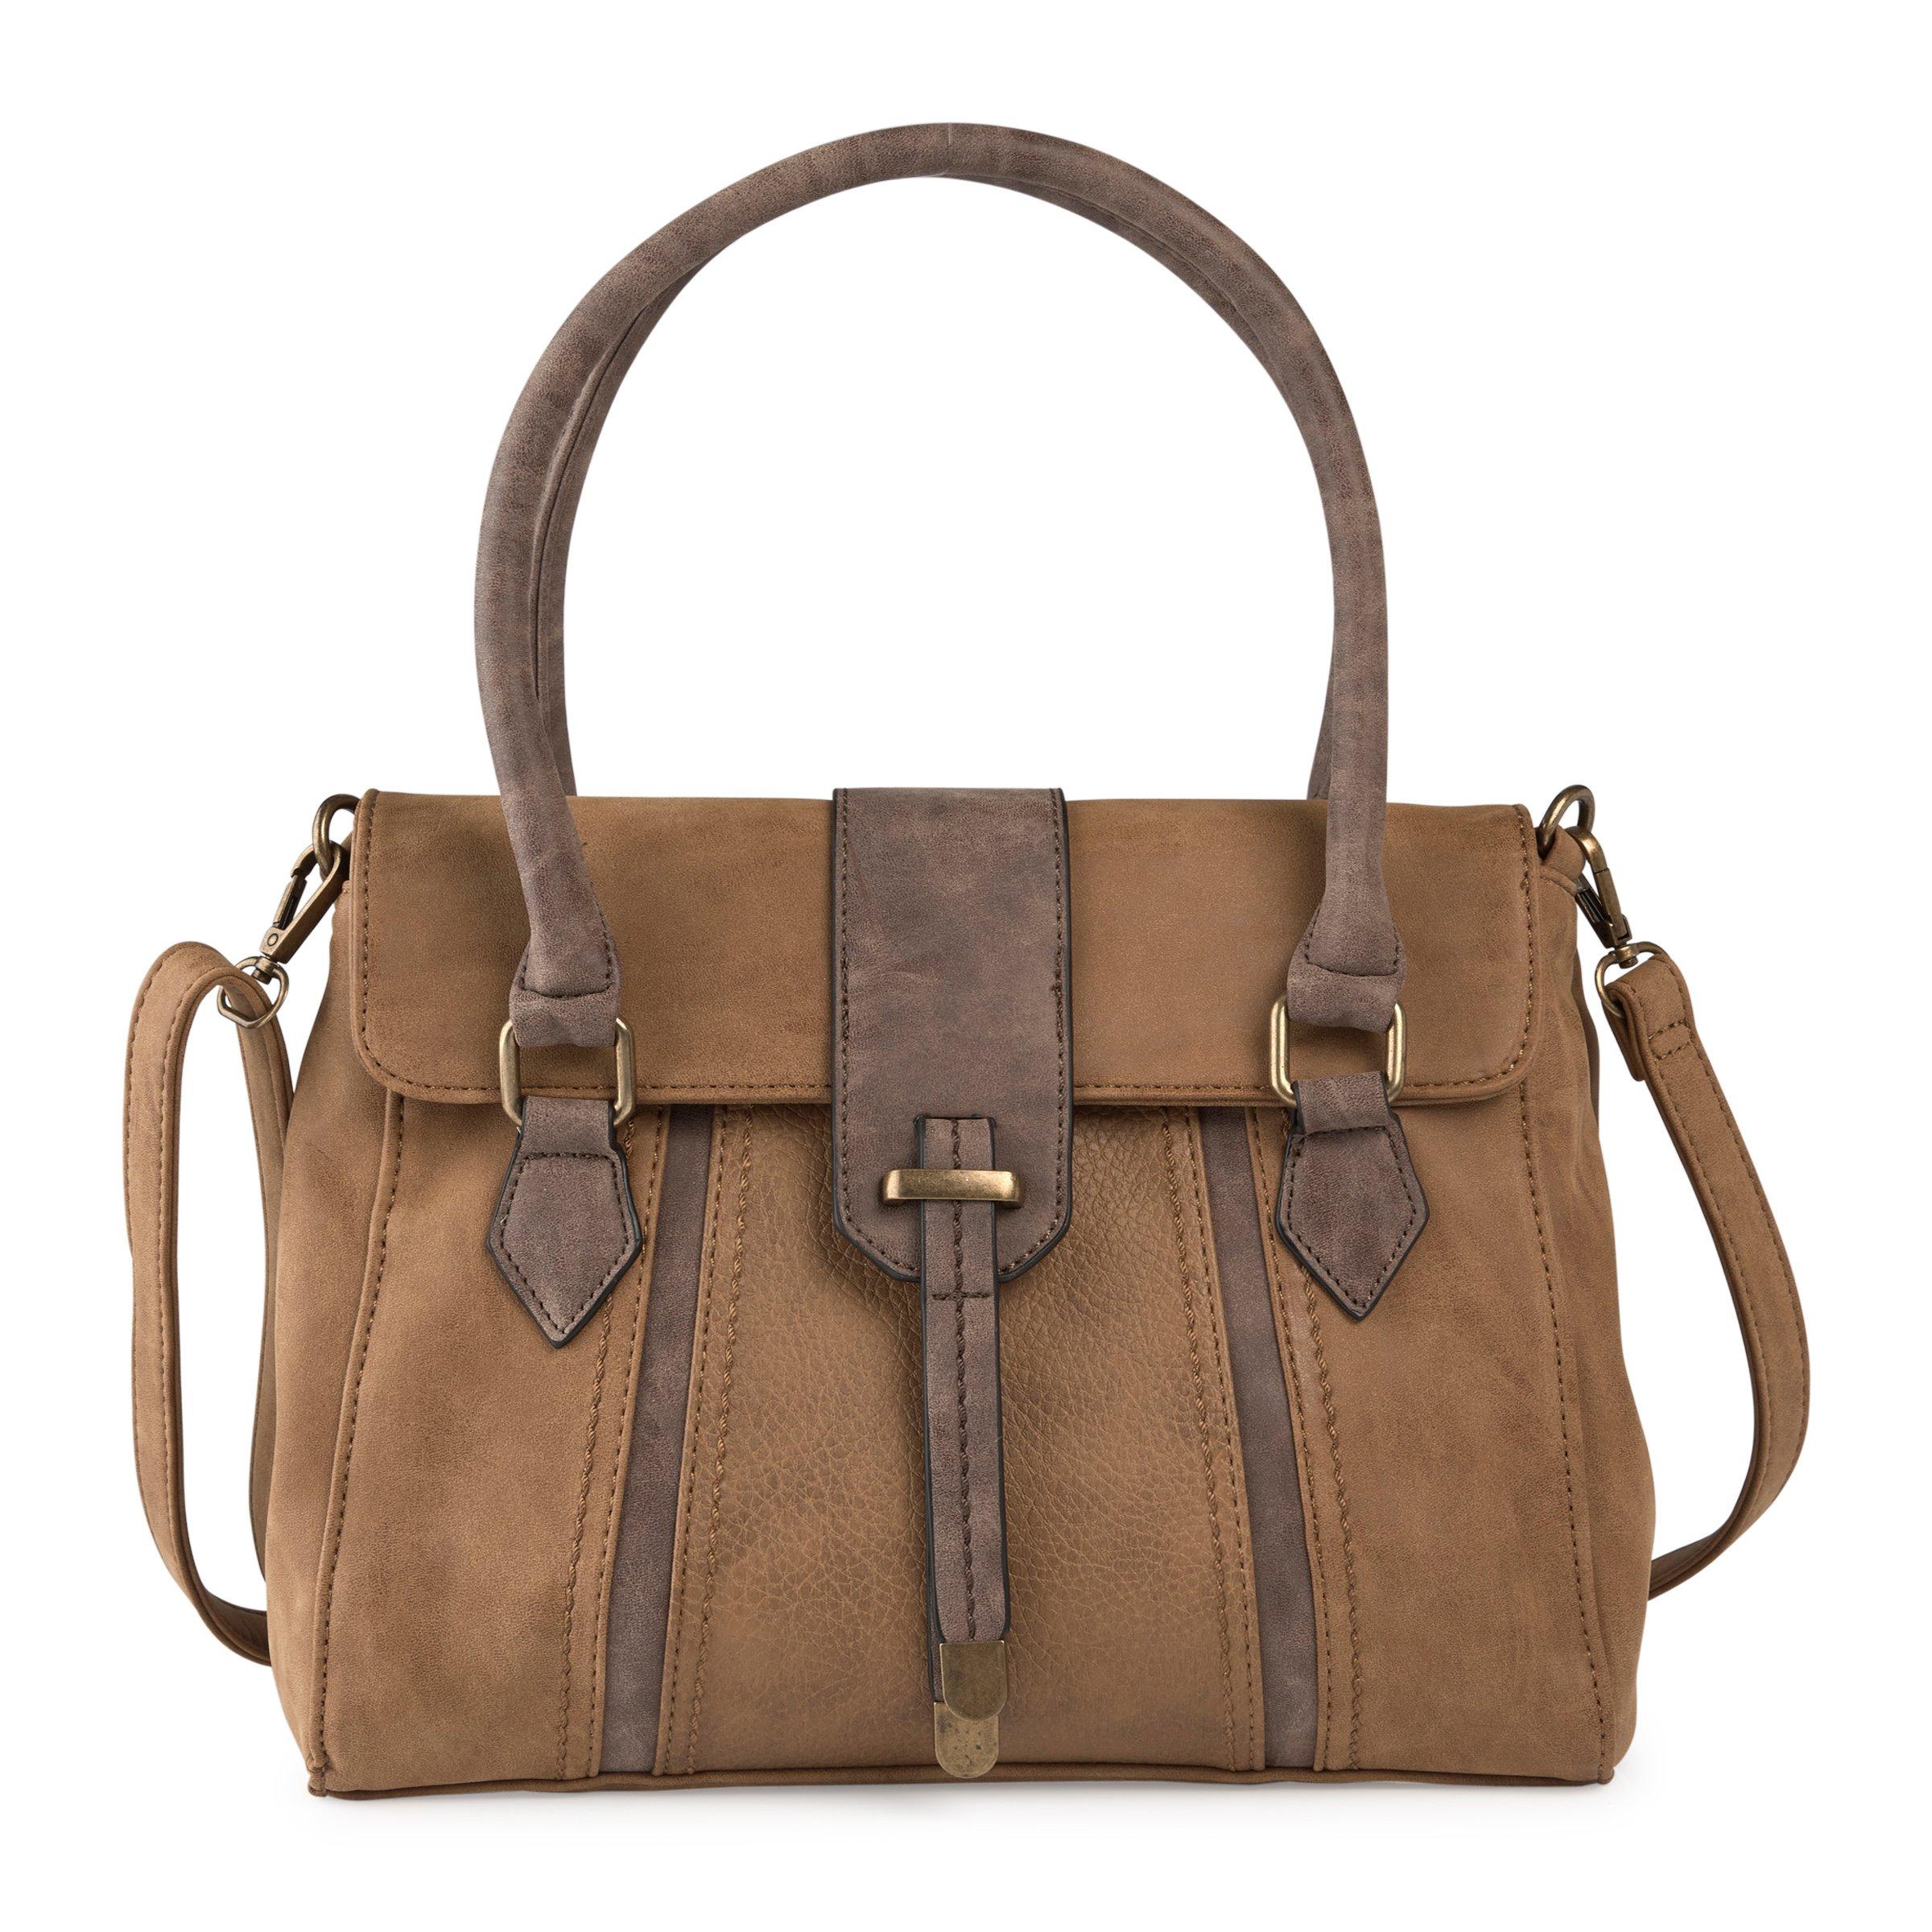 Ladies Bags | Purses, Clutches & More Online